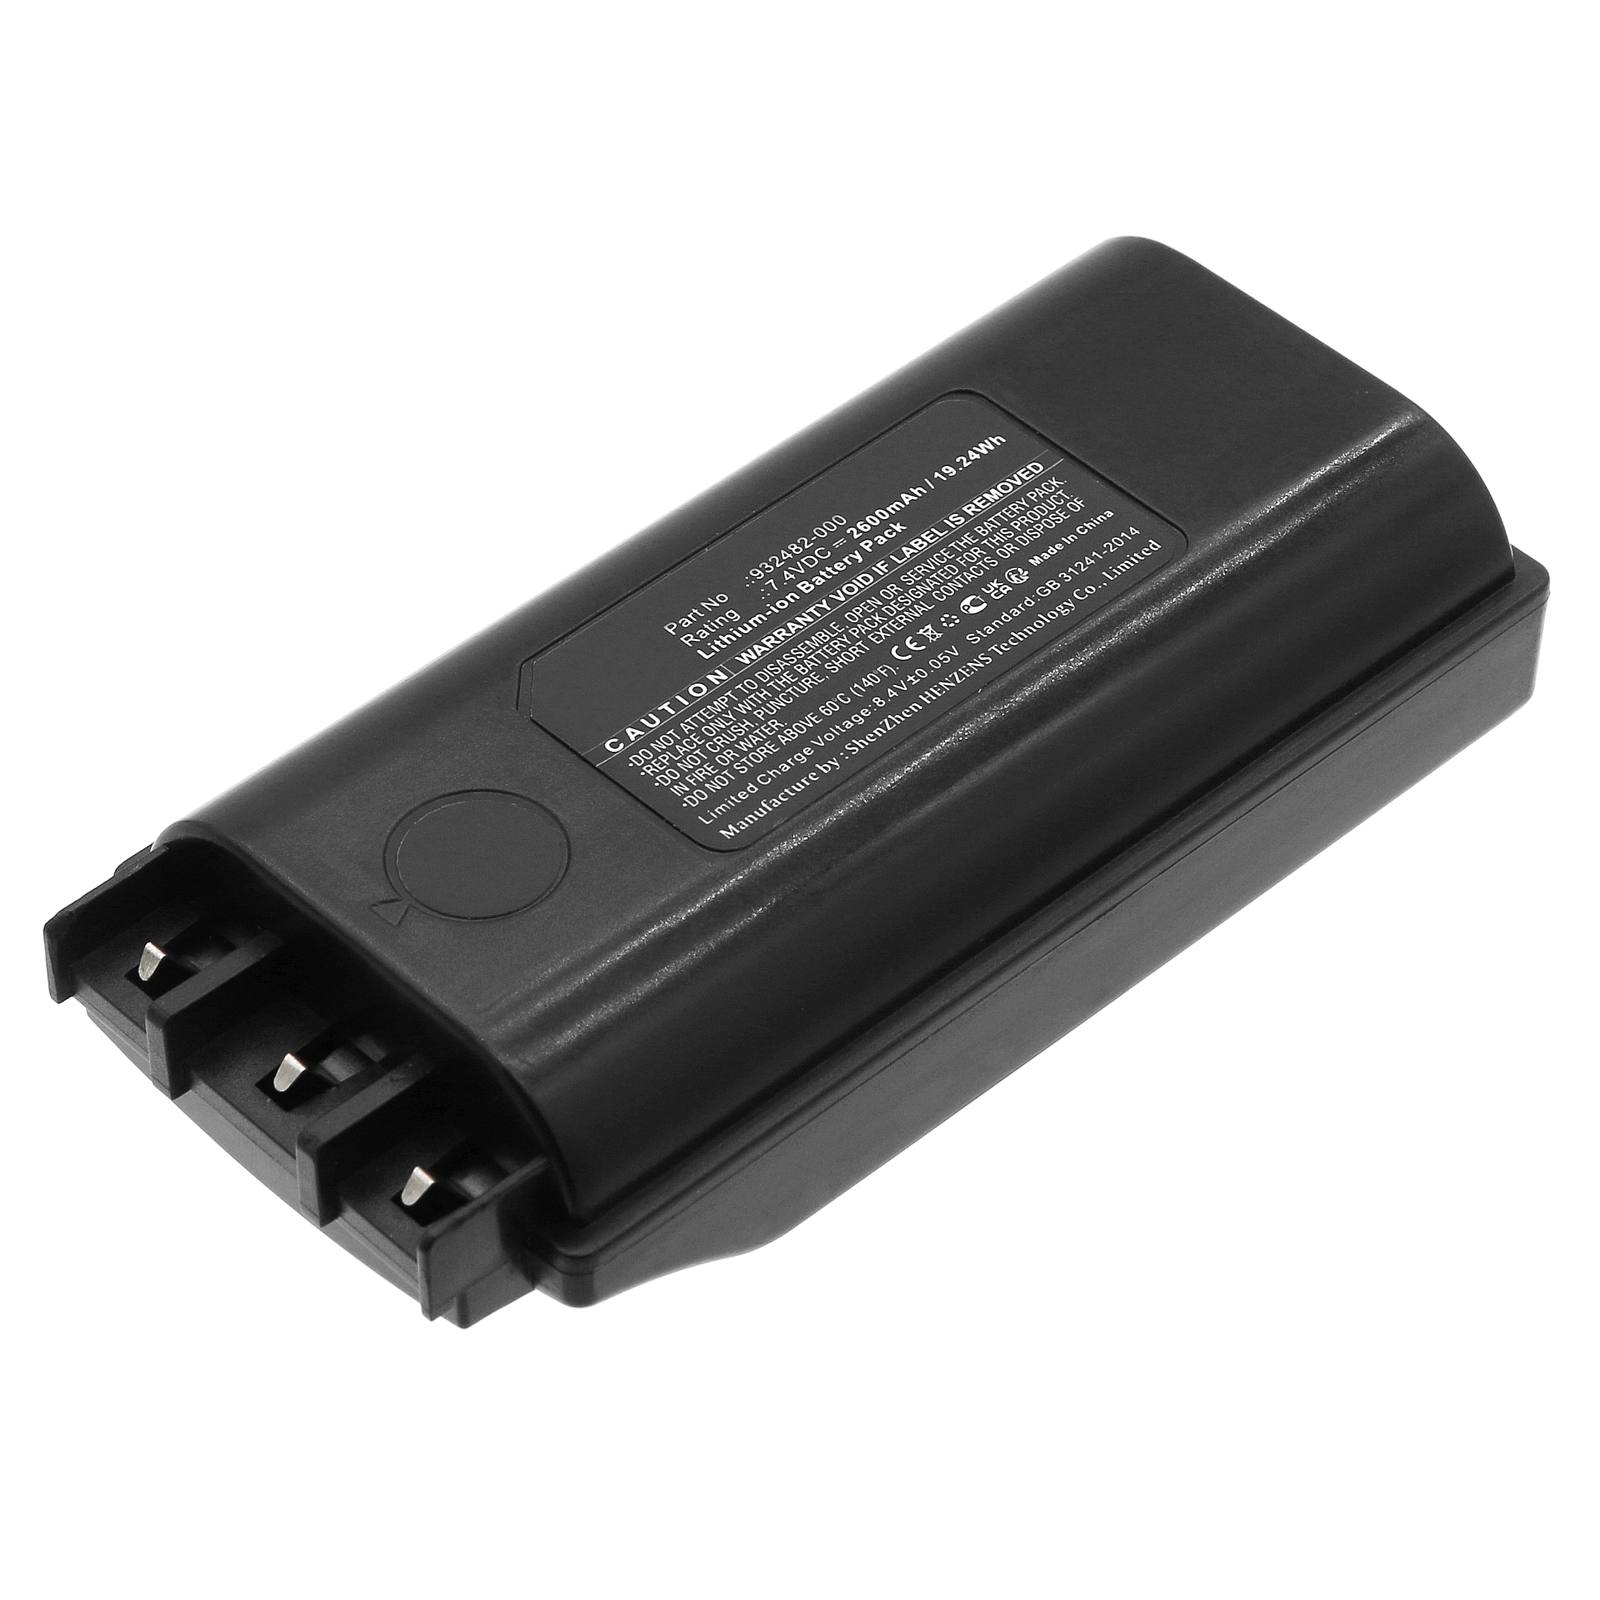 Synergy Digital Remote Control Battery, Compatible with Akerstroms 365-2000 Remote Control Battery (Li-ion, 7.4V, 2600mAh)